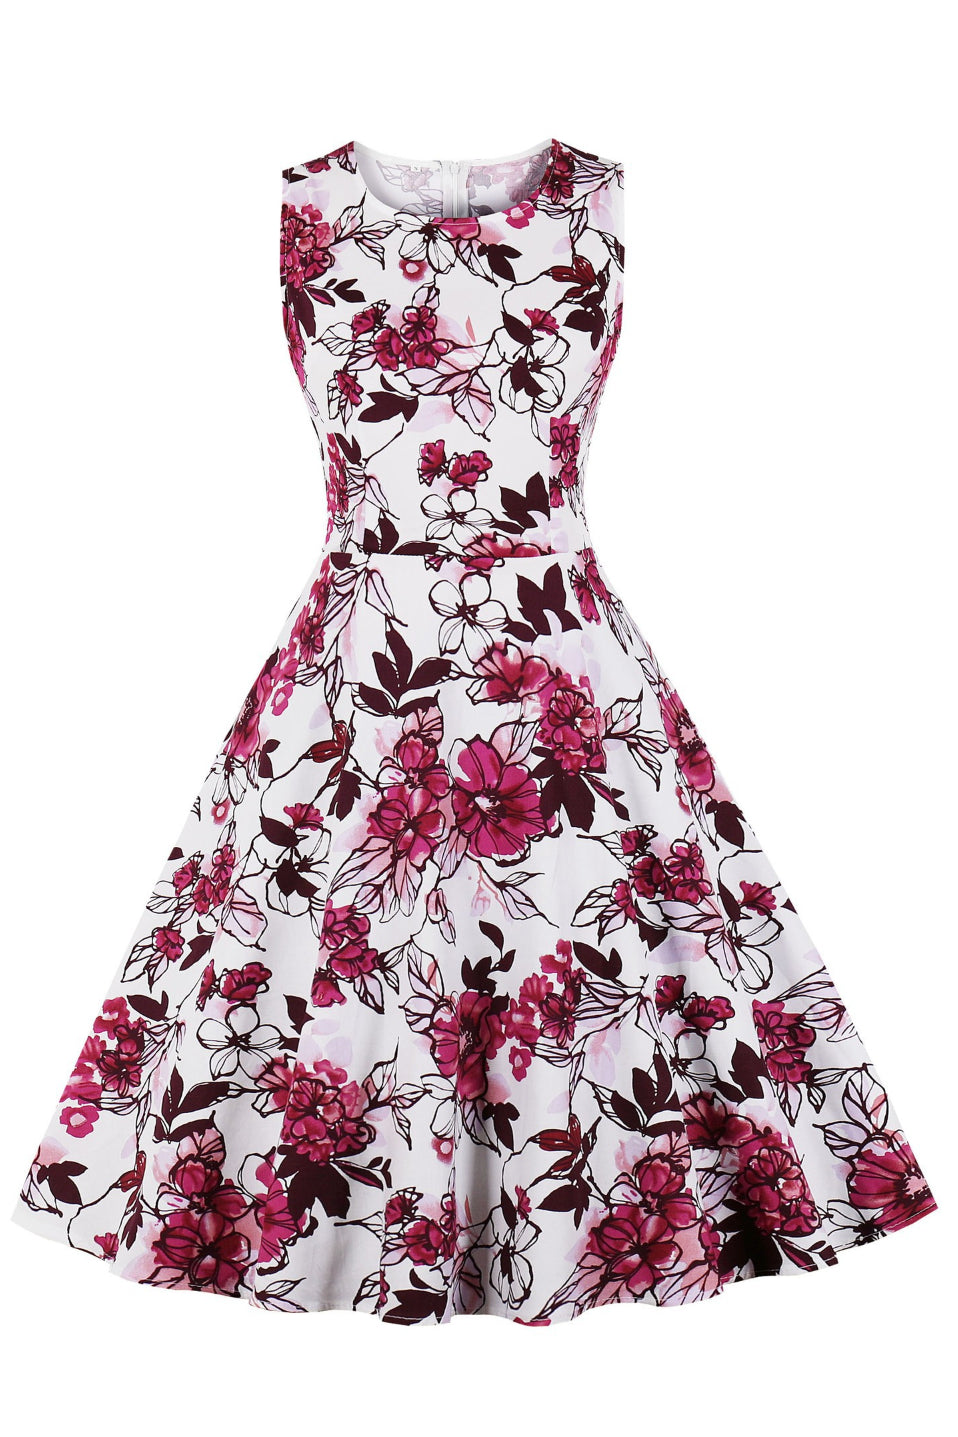 3 Styles Sleeveless Floral A-line Vintage Dress